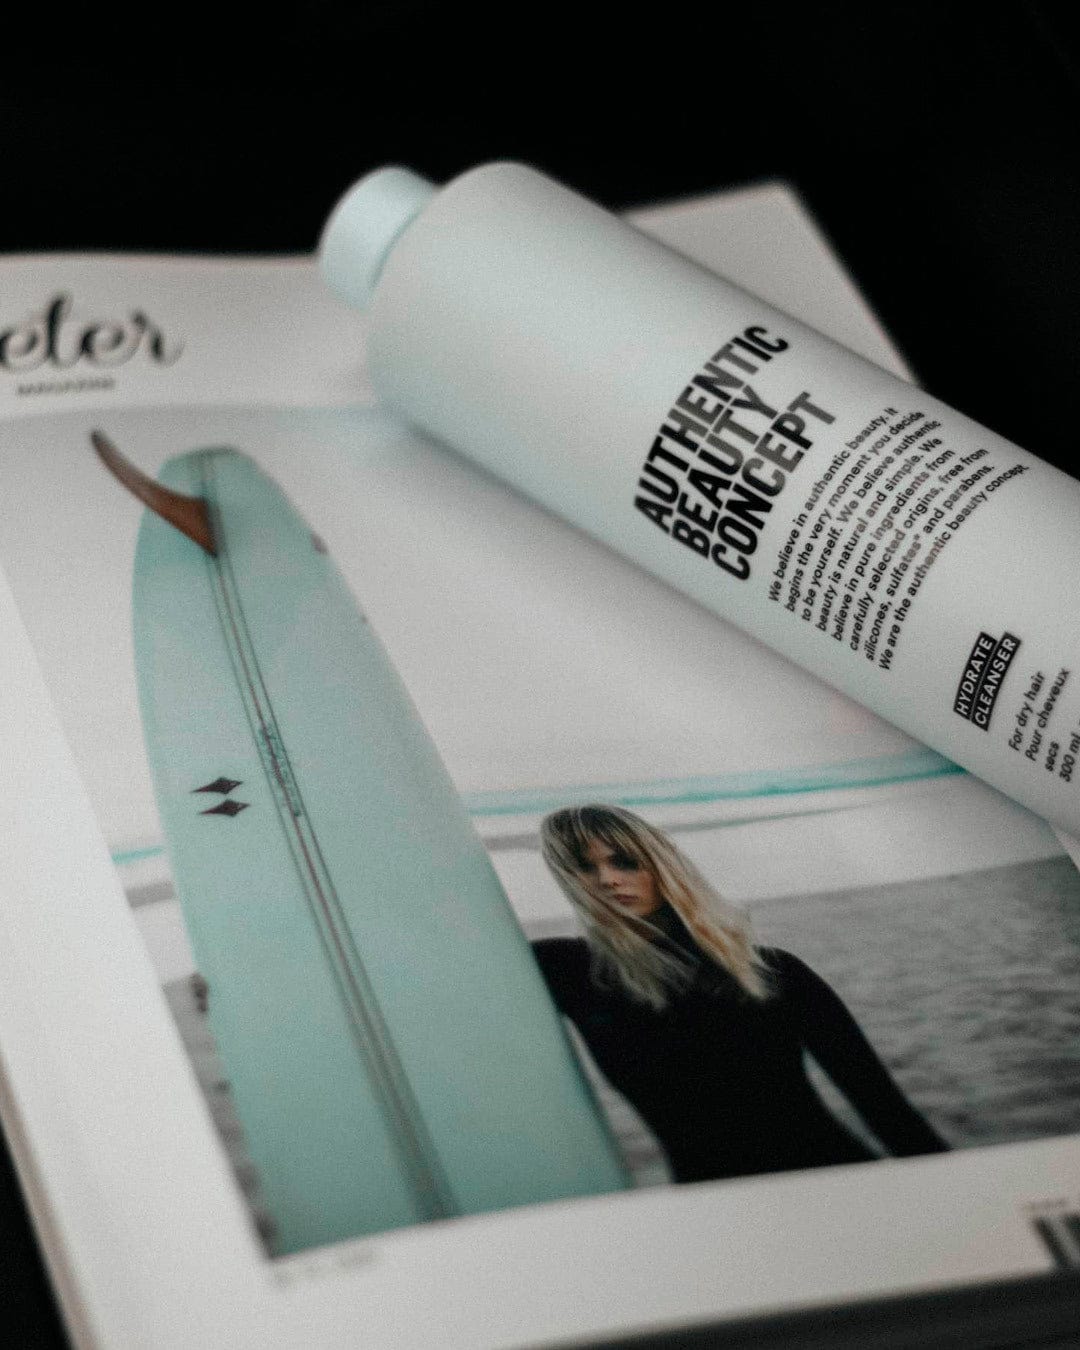 Authentic Beauty Concept Champú HYDRATE Cleanser 300ml For Dry Hair Roberta Beauty Club Tienda Online Productos de Peluqueria